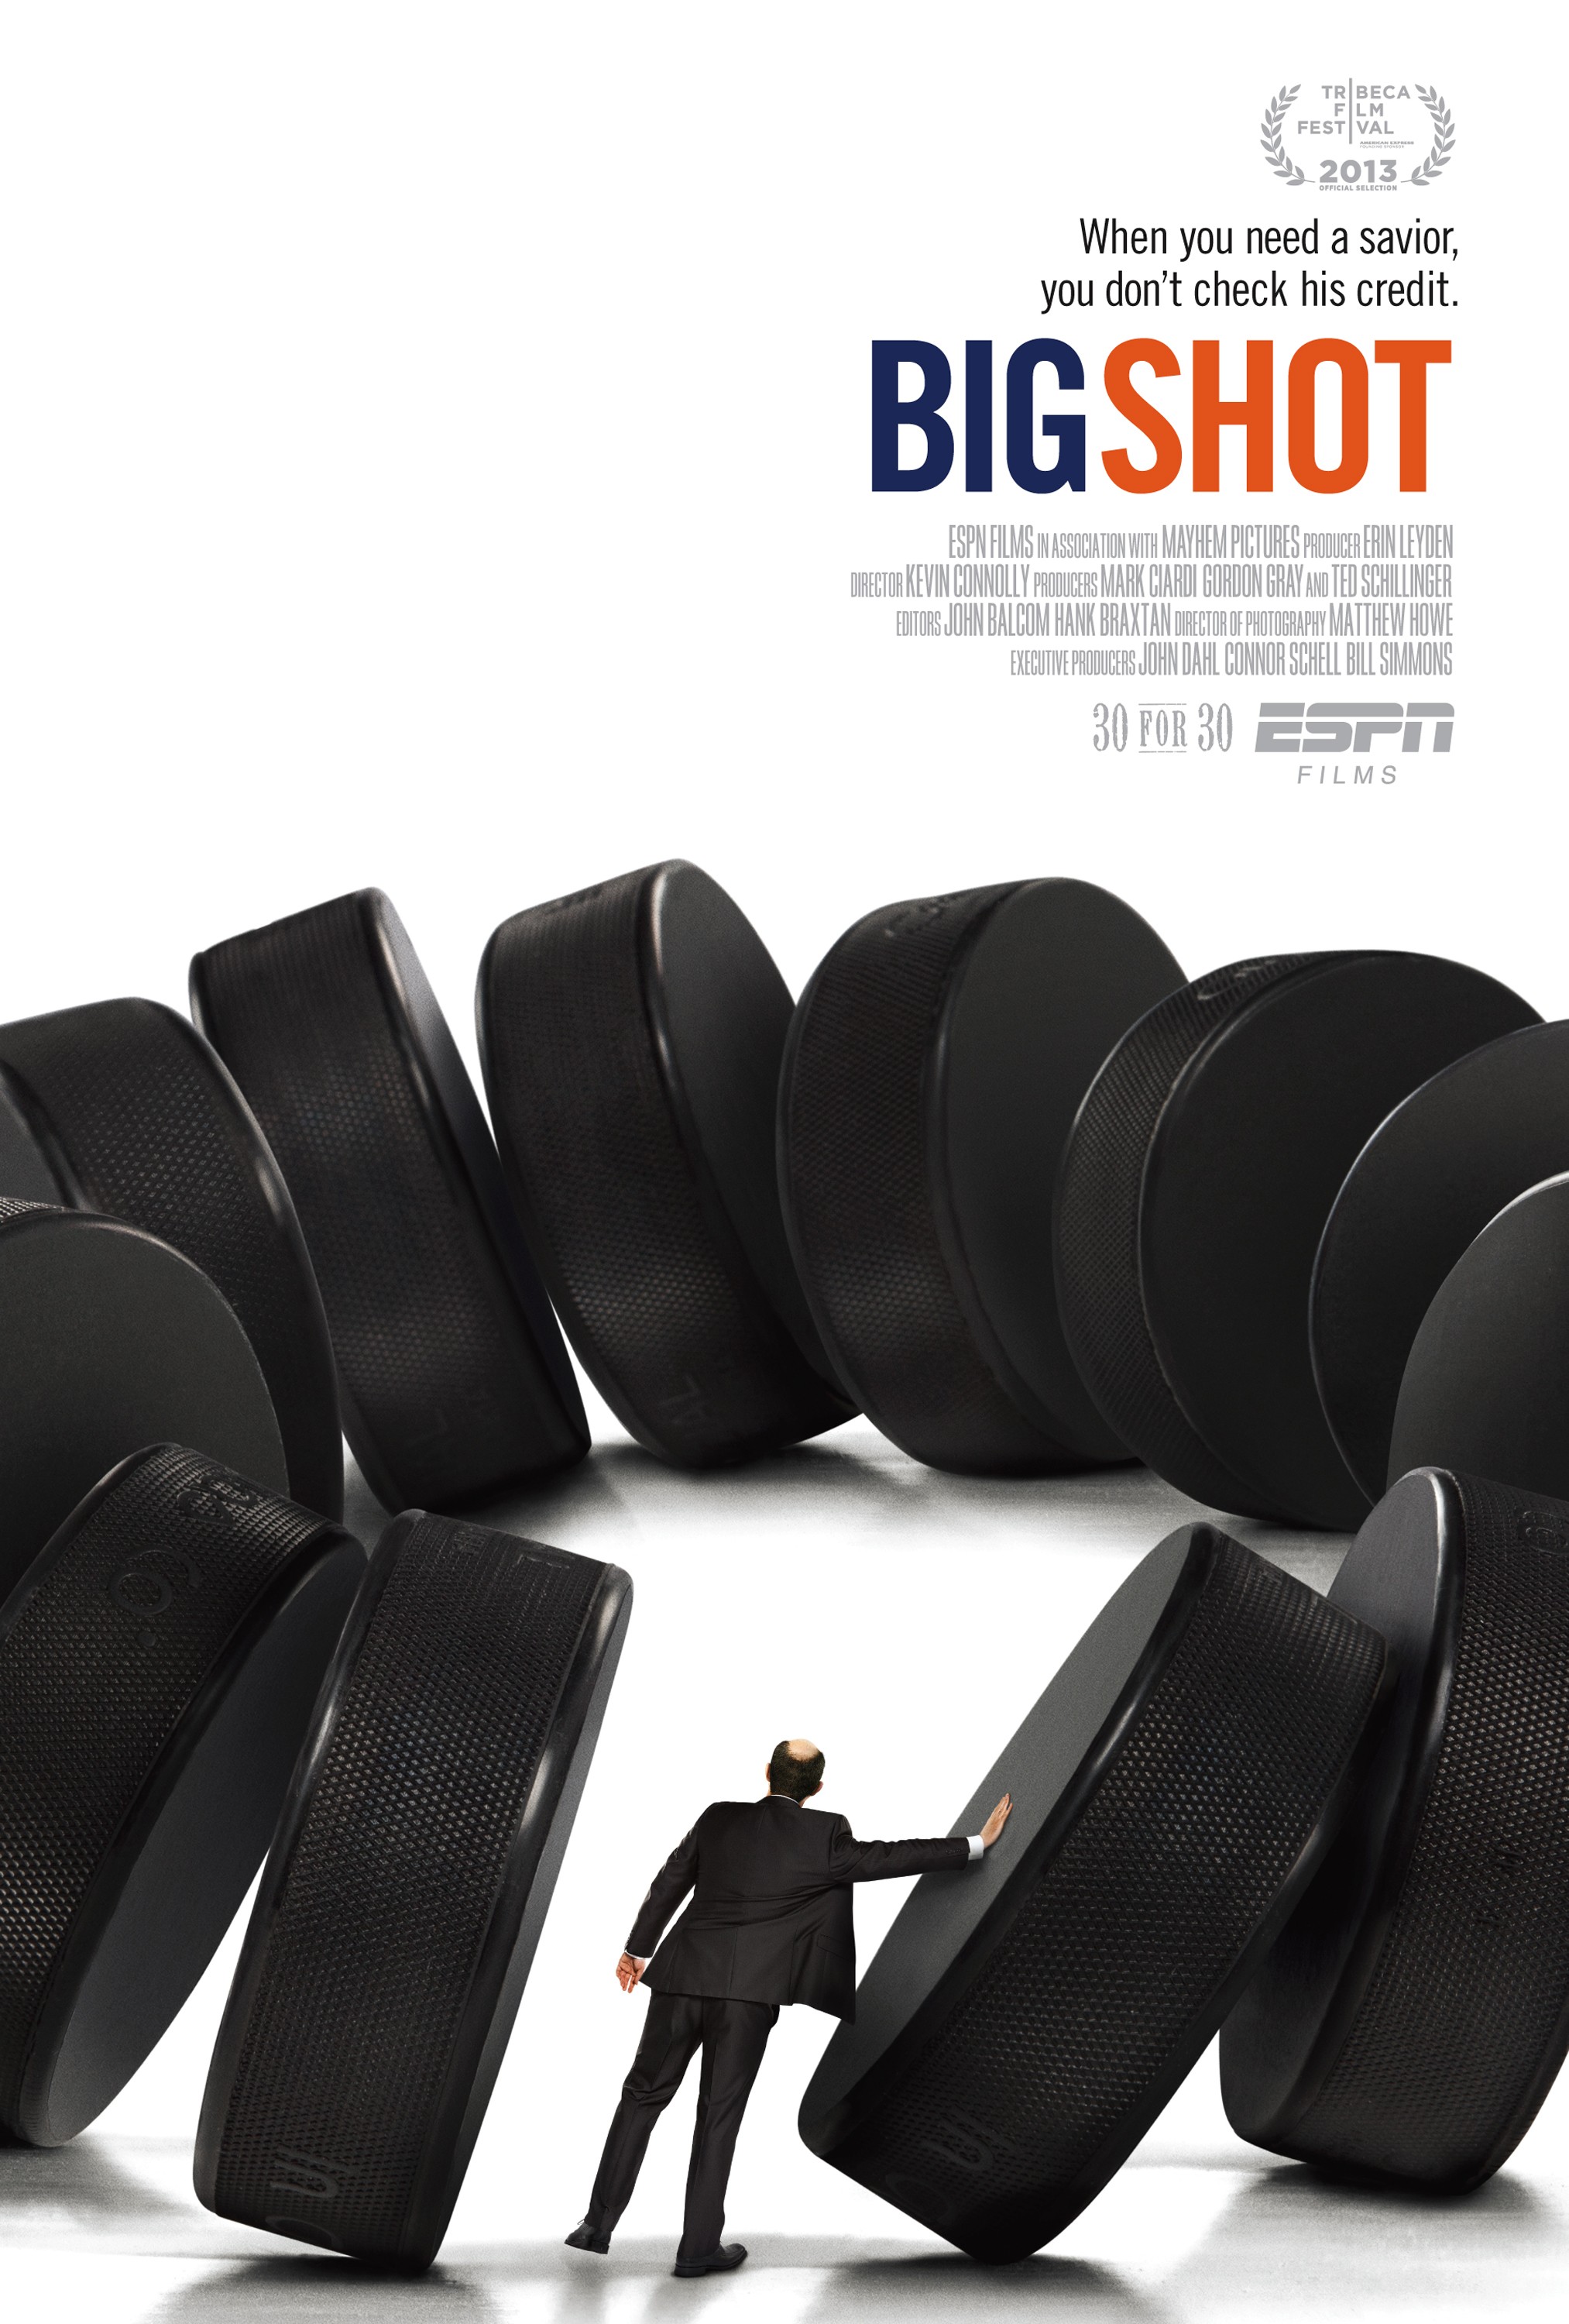 Mega Sized Movie Poster Image for Big Shot 